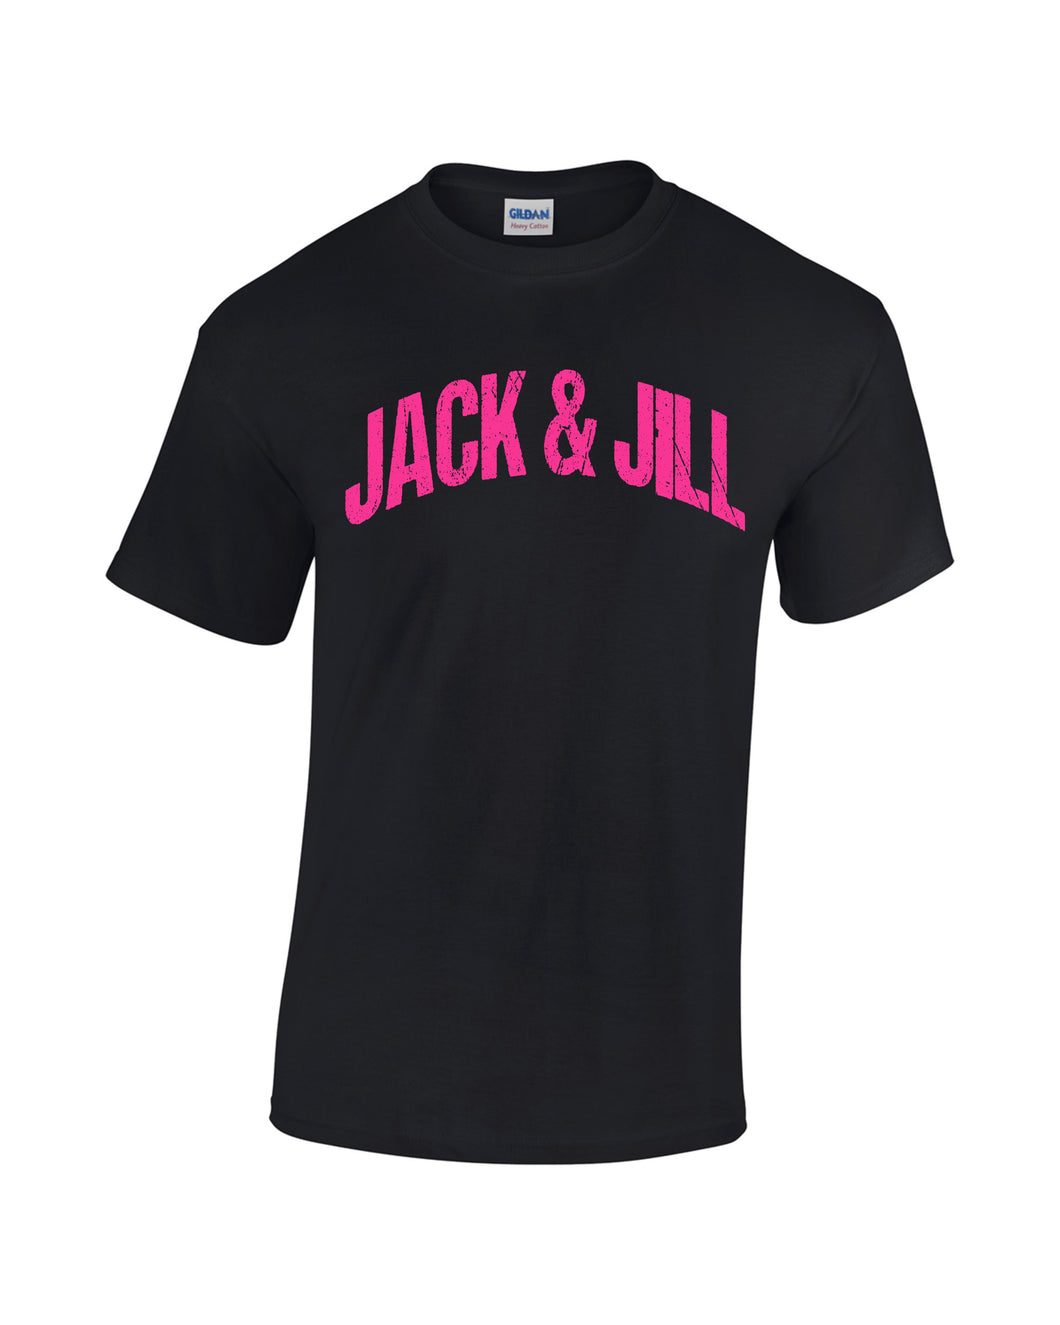 JACK & JILL Tshirt - Pink